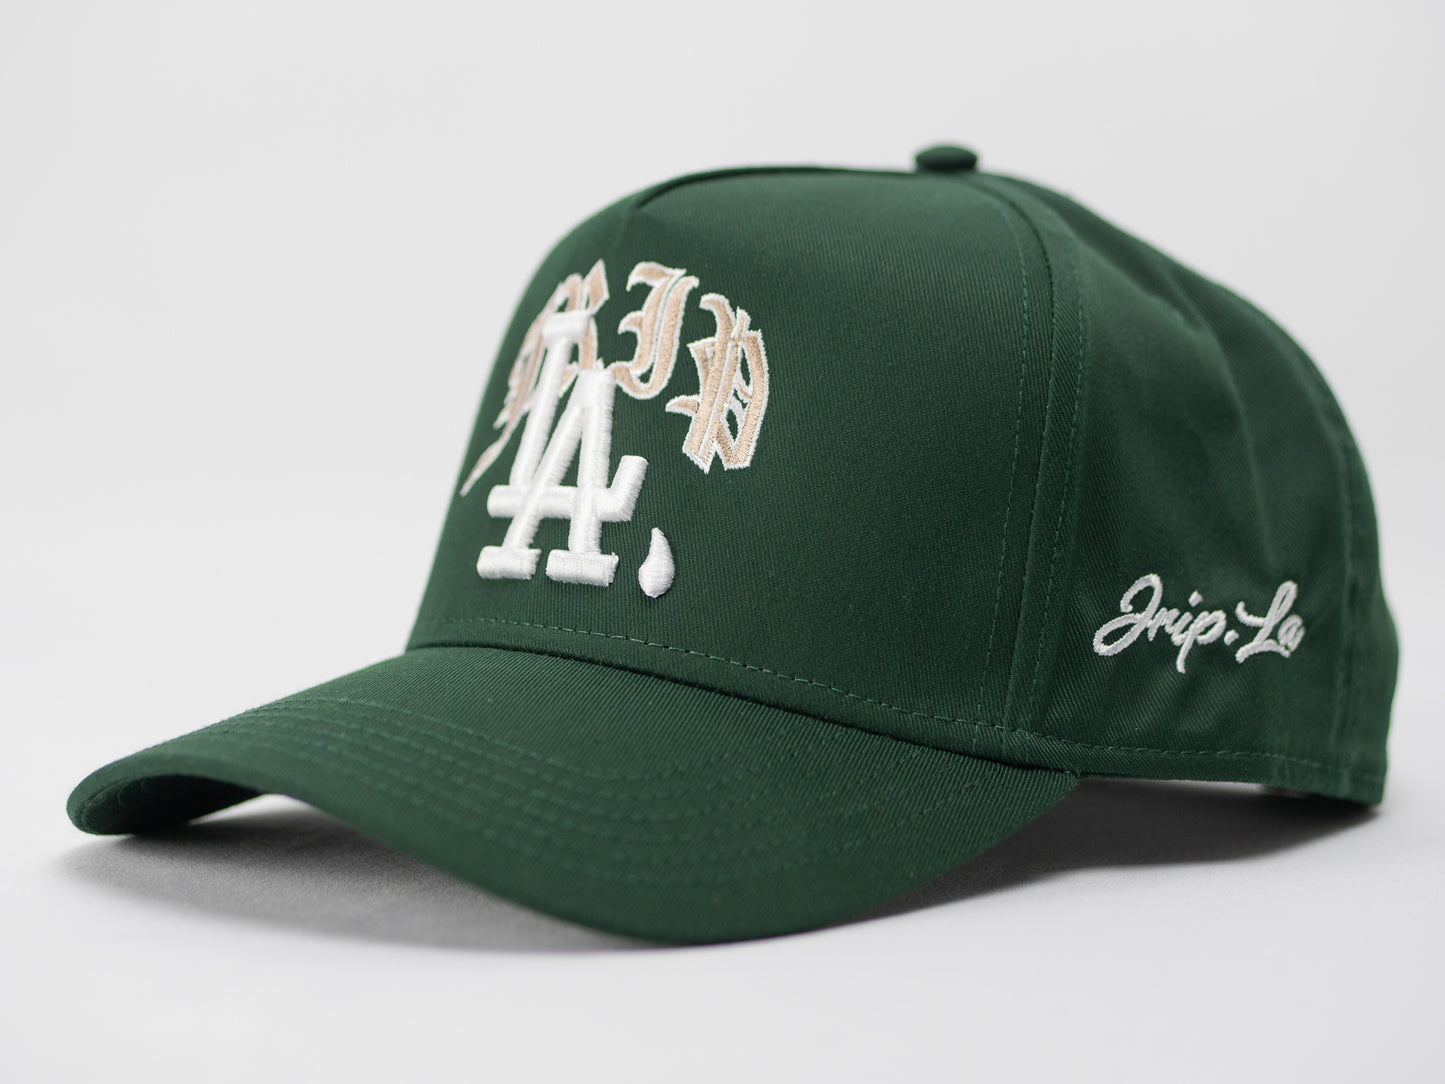 Jrip LA Snapback Hat (FOREST GREEN)